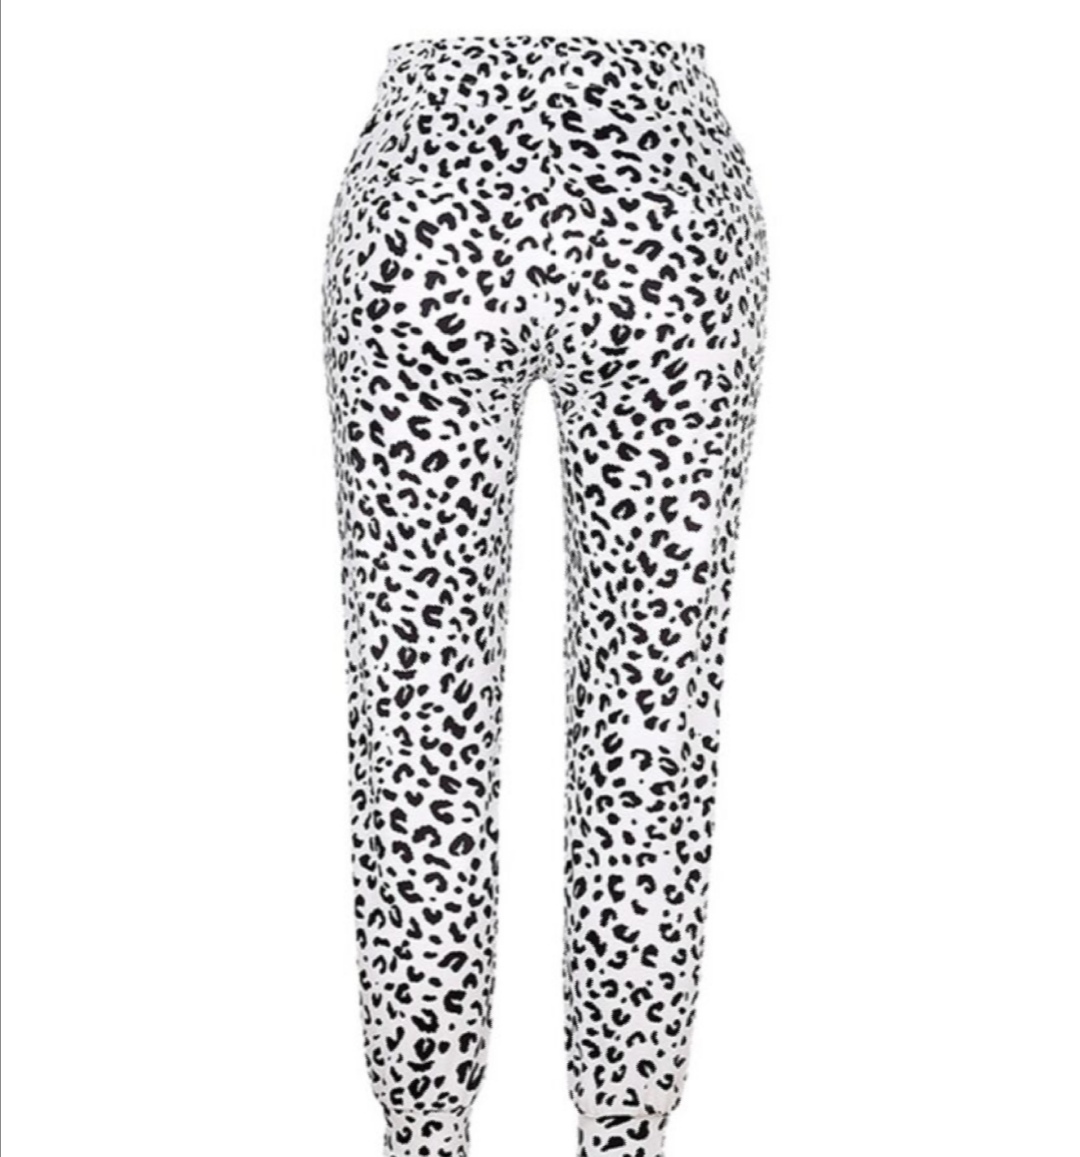 Leopard pants | LoveModernVintage